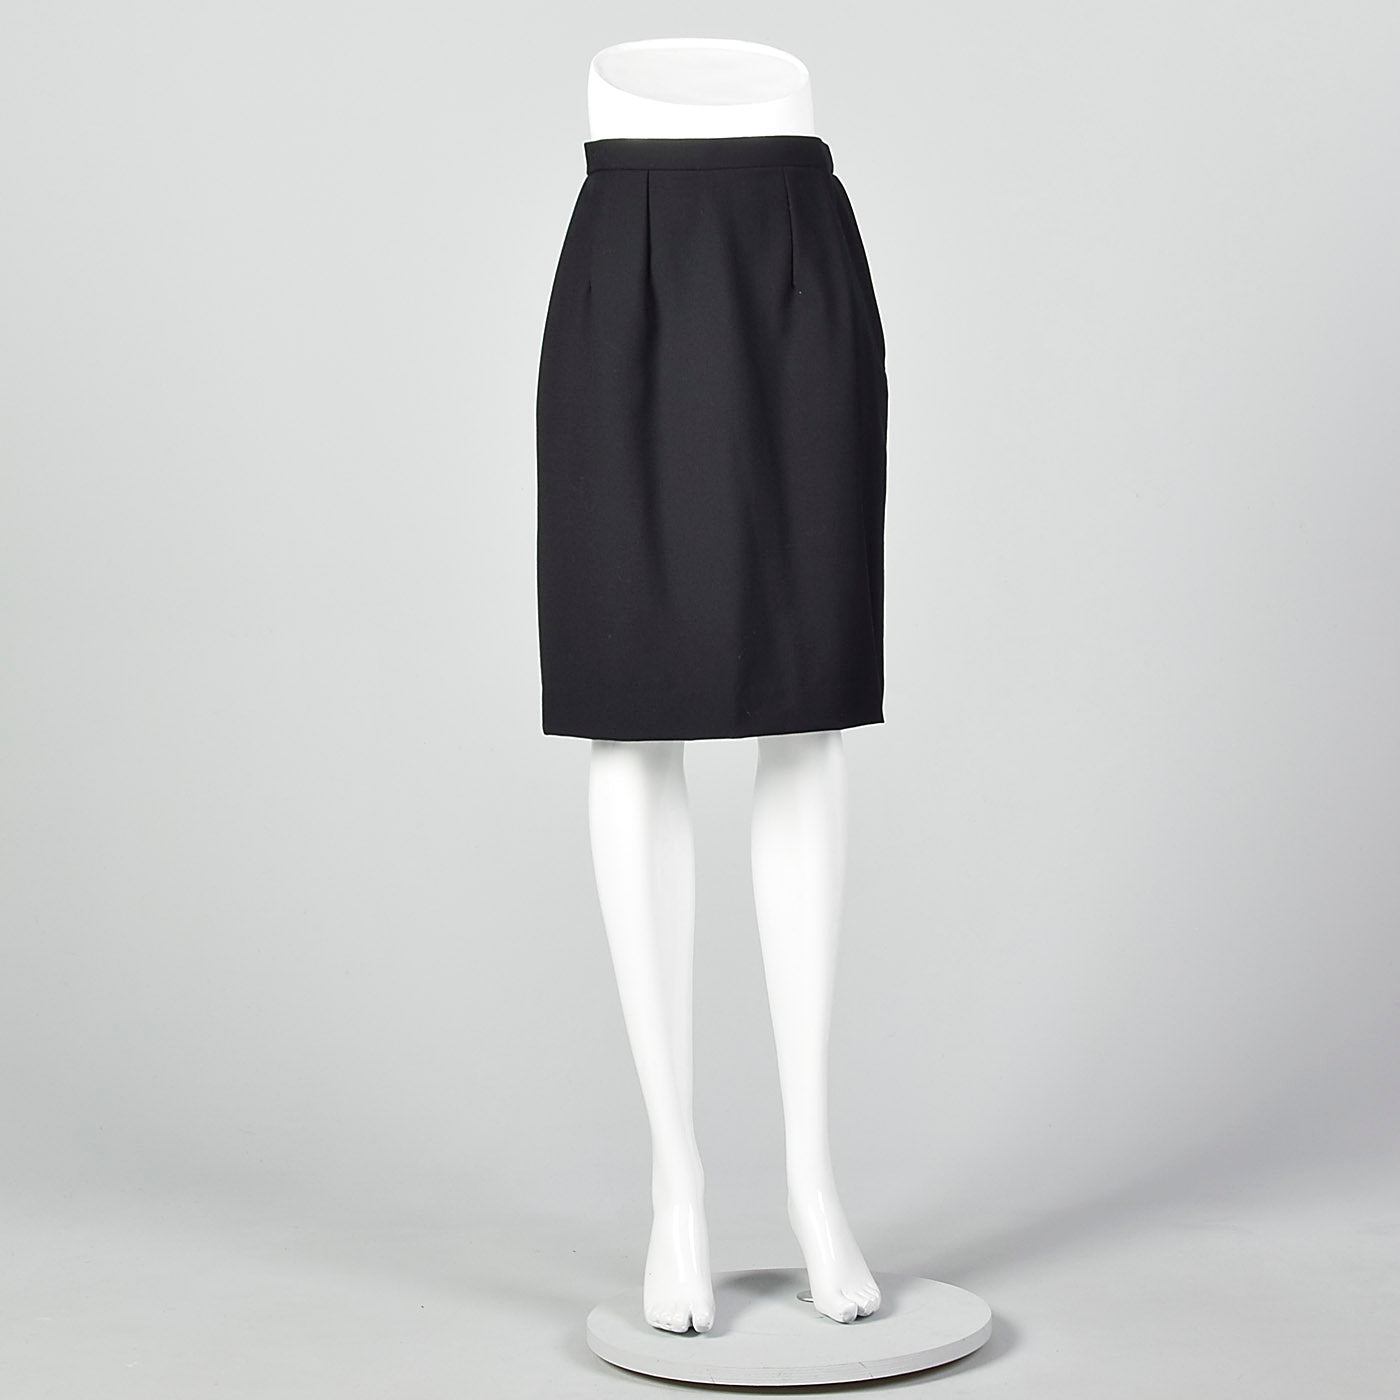 1950s Classic Black Pencil Skirt